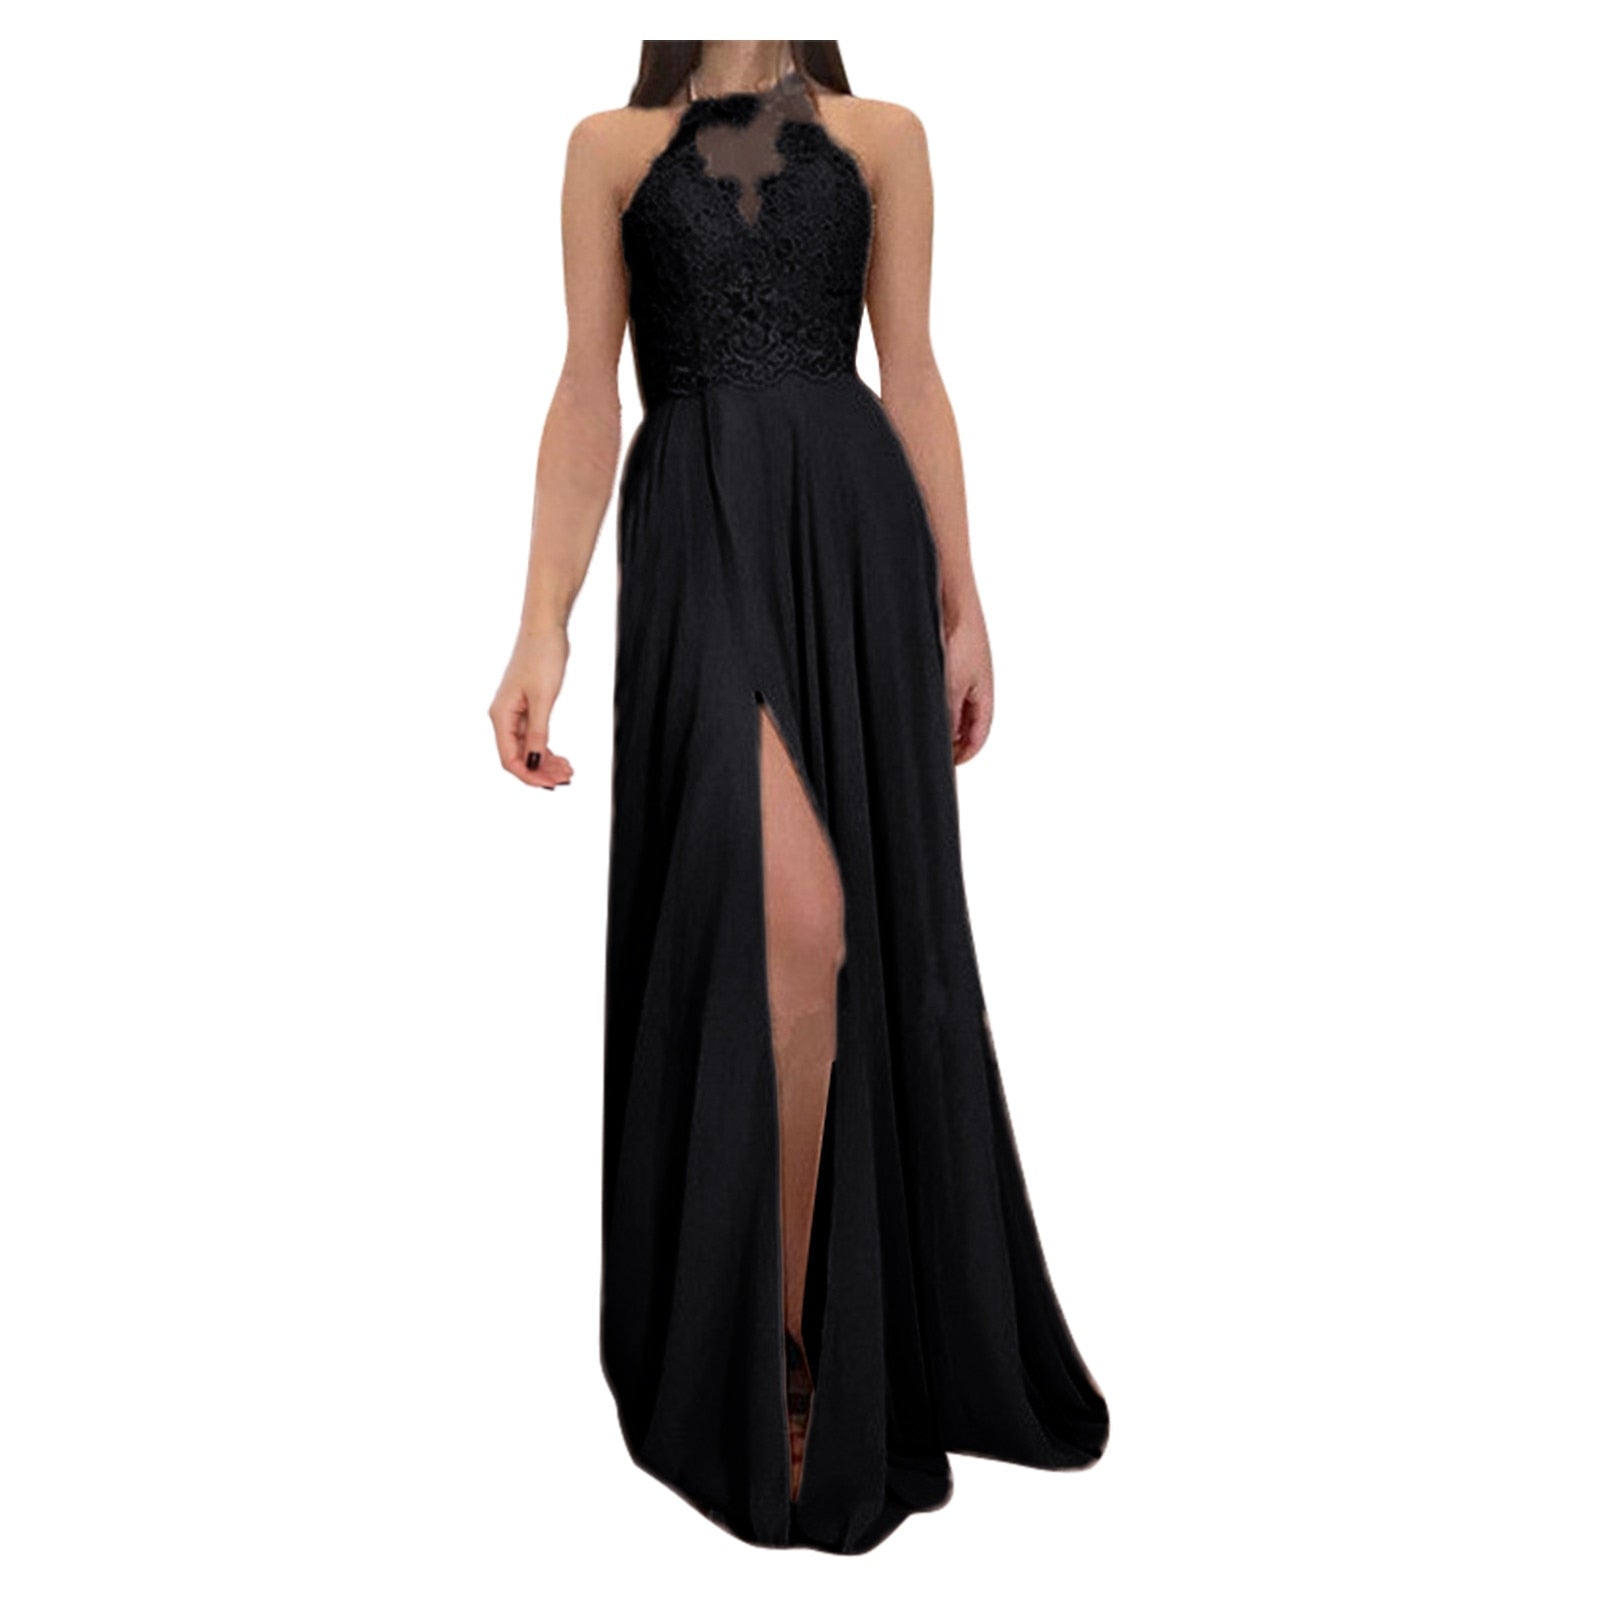 HOOR Elegant Sexy Lace Gown Black